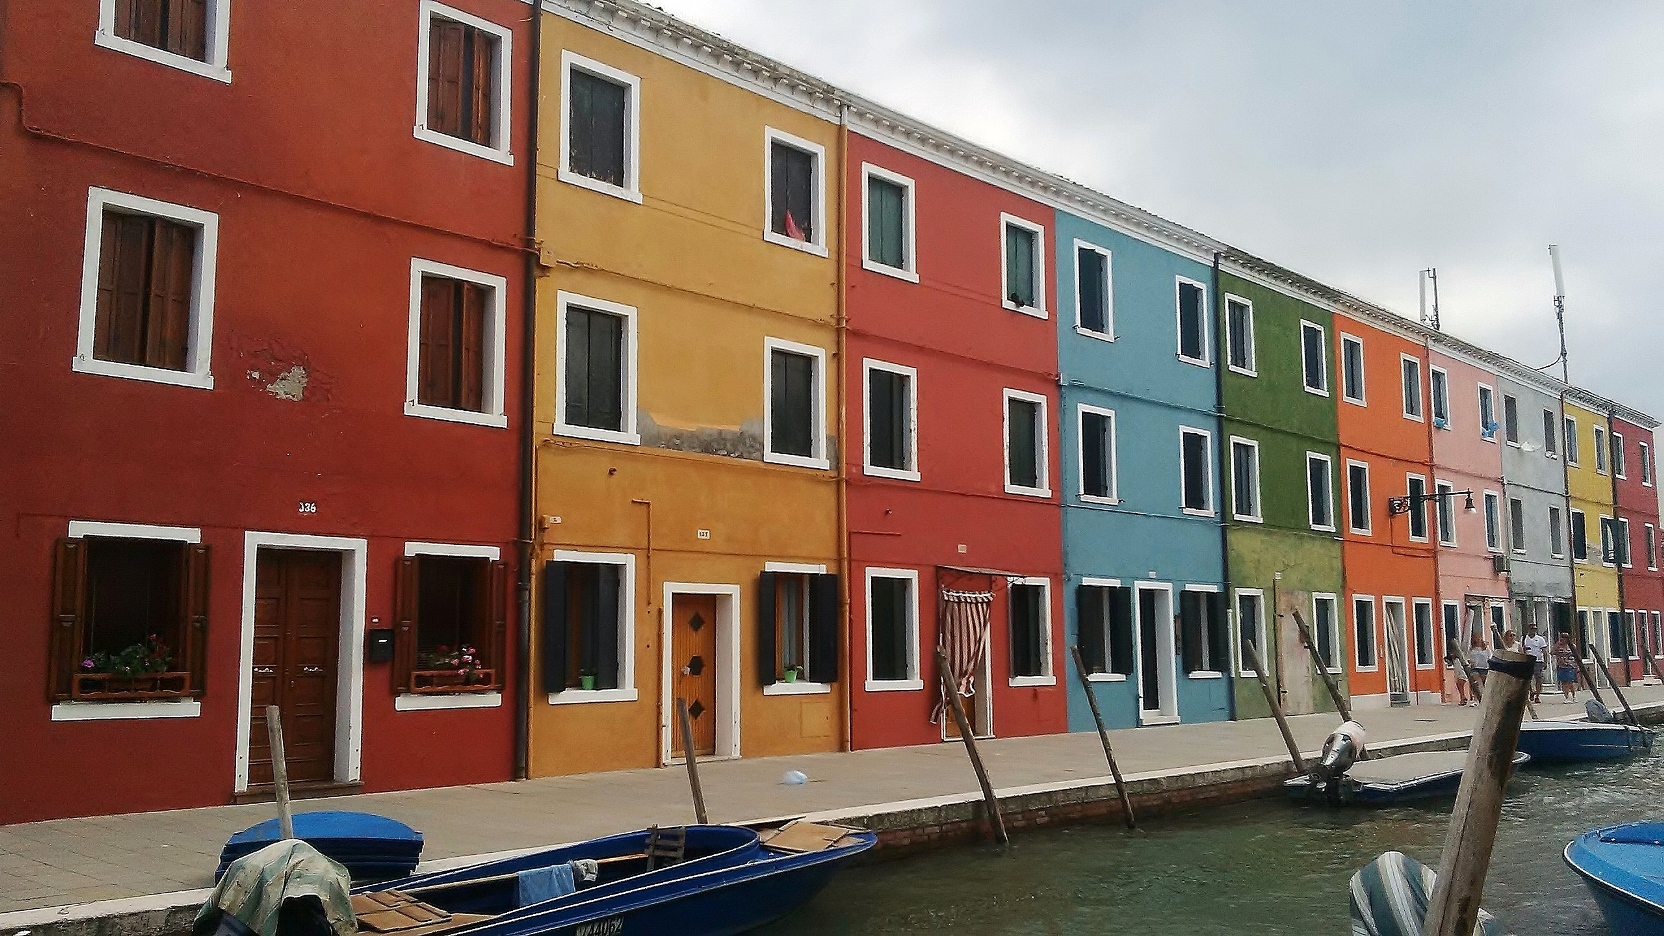 burano colourful buildings